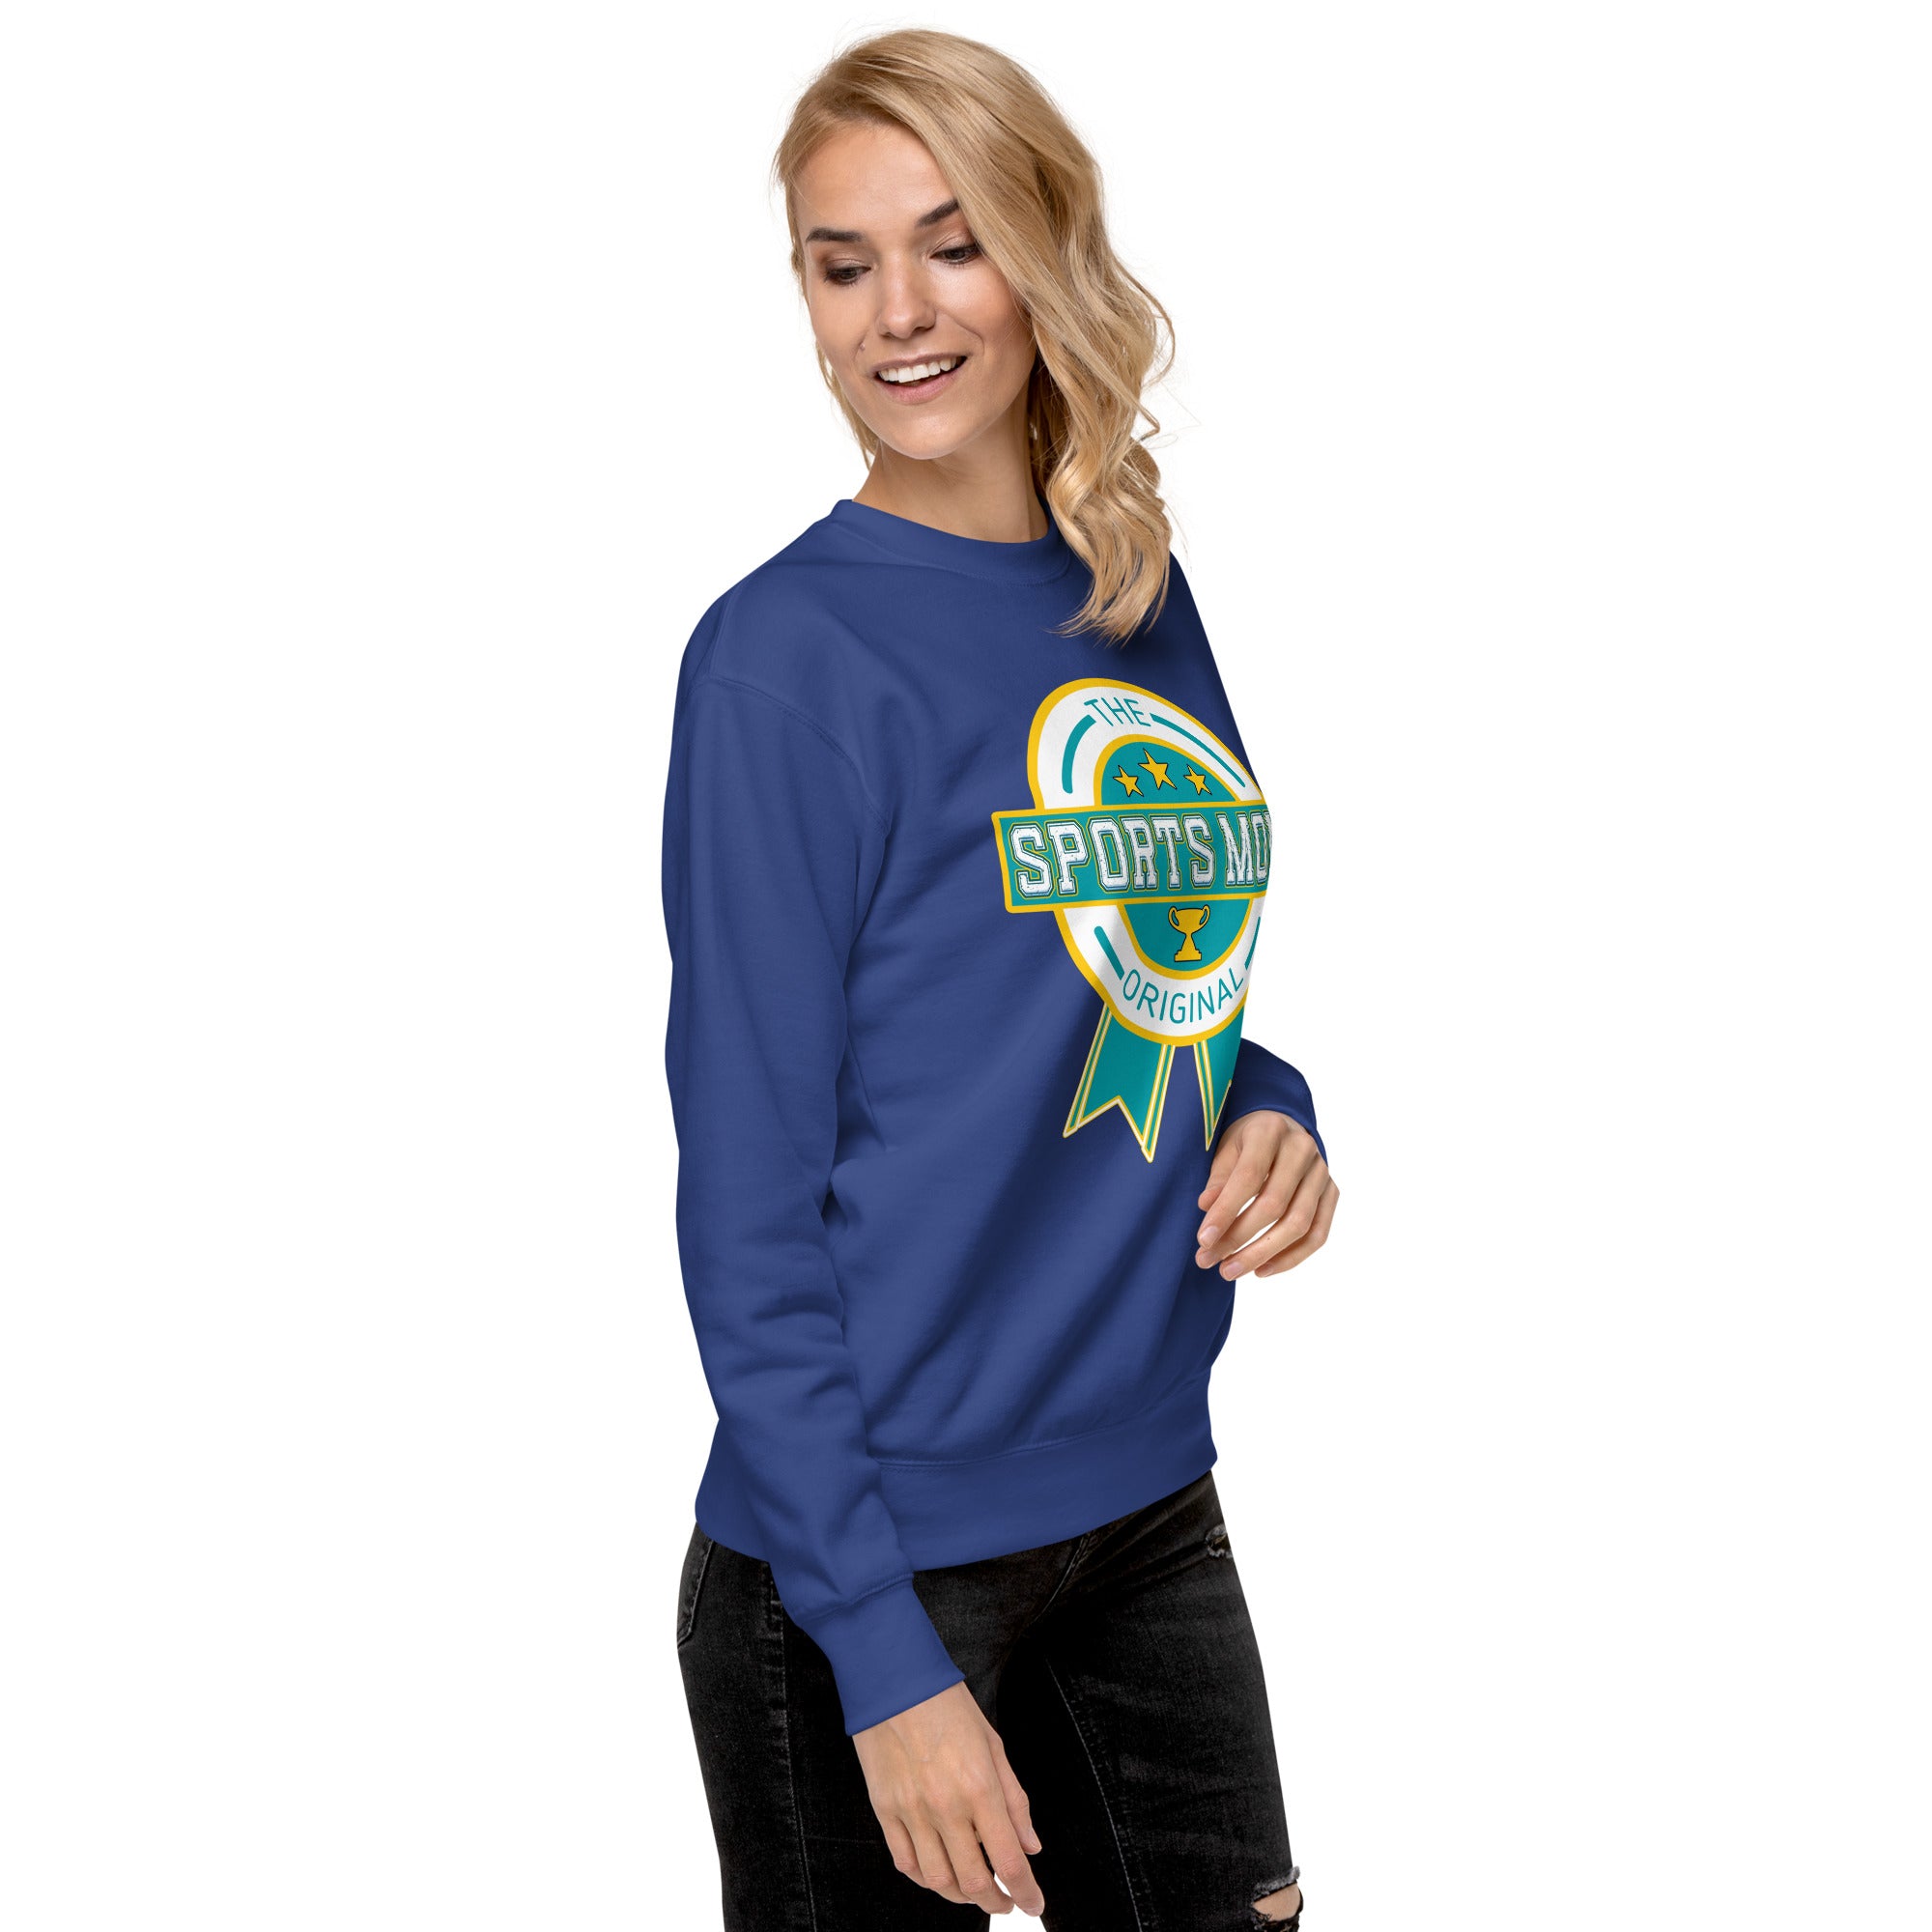 The Original Sports Mom Comfort Crew Sweatshirt